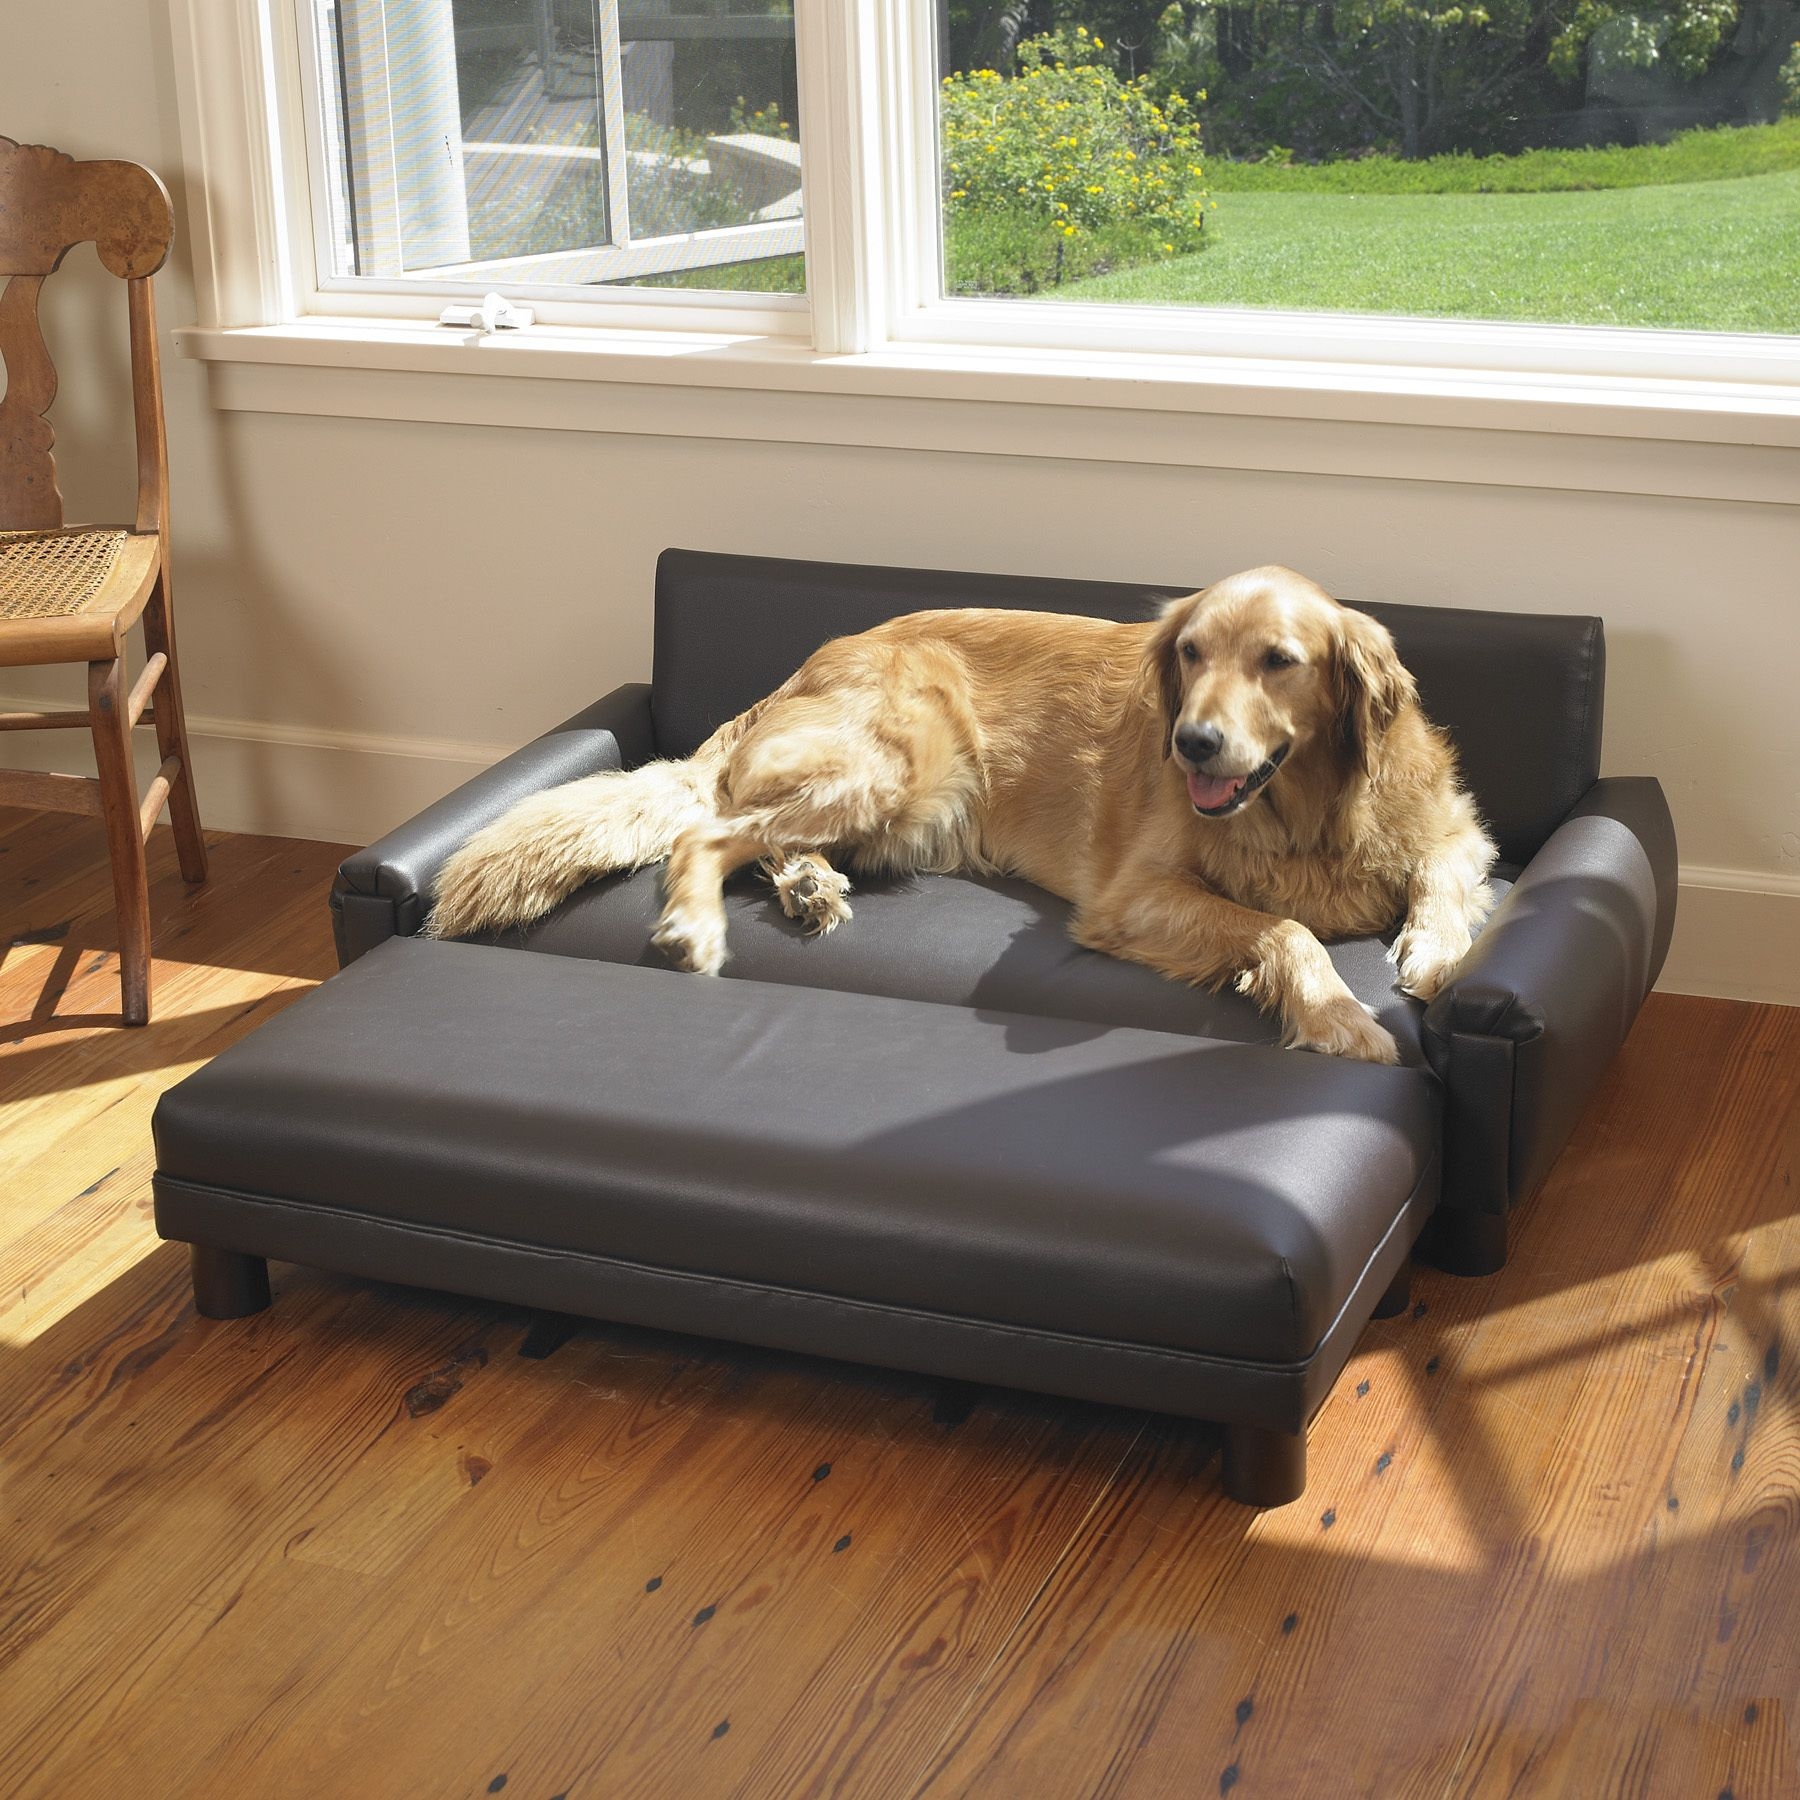 Mission hills faux leather dog sofa